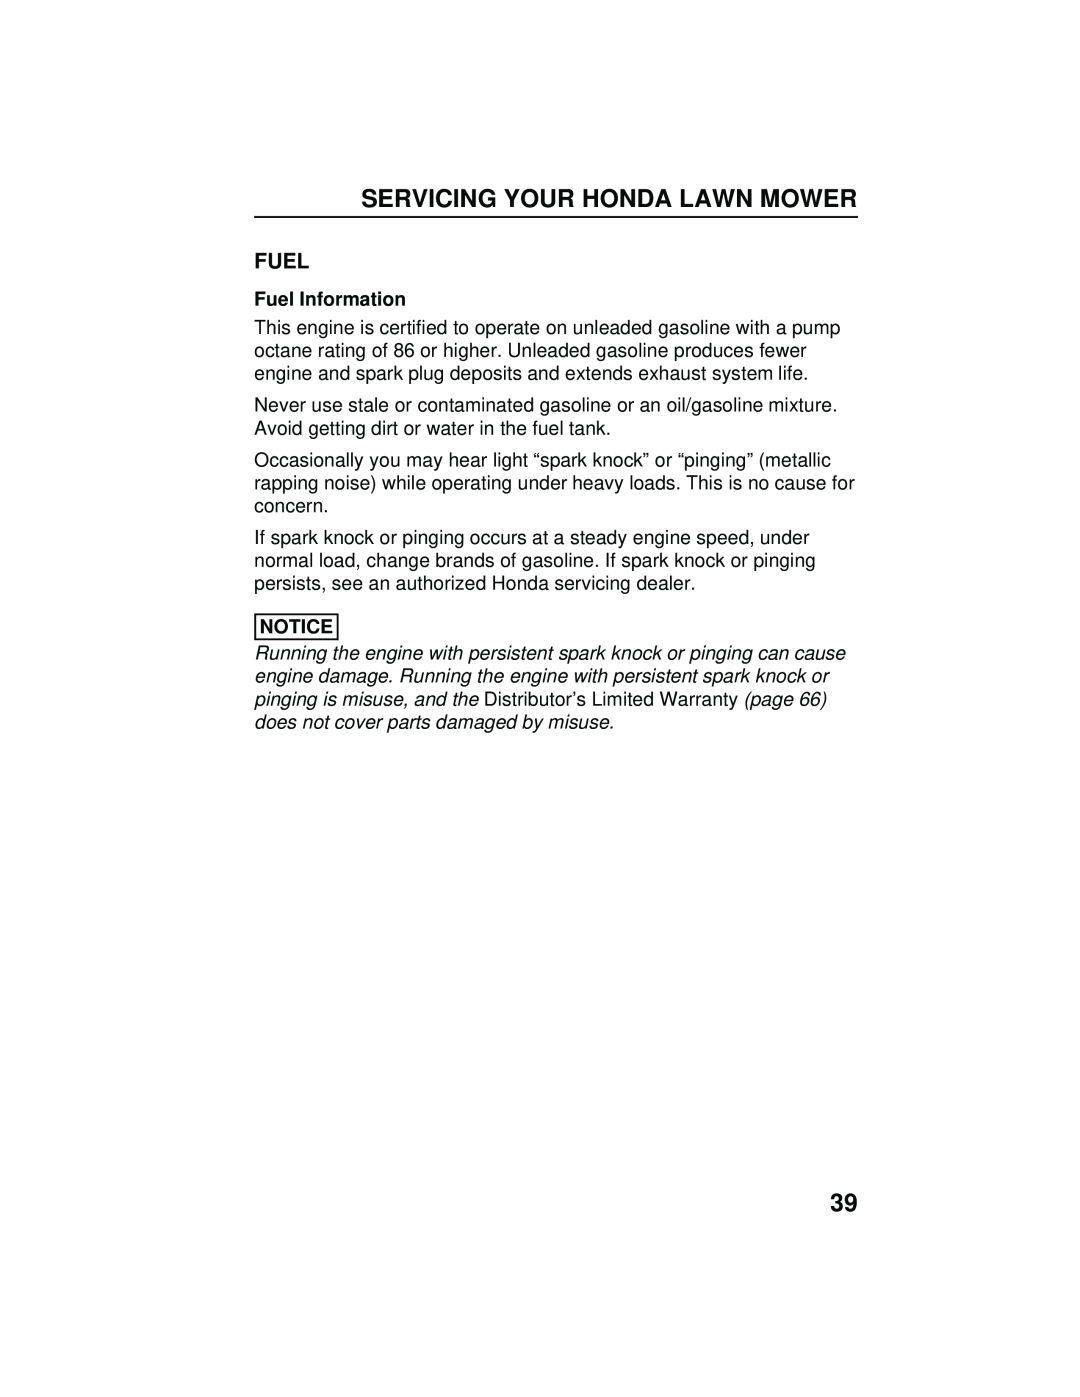 Honda Power Equipment HRB216TXA owner manual Fuel Information, Servicing Your Honda Lawn Mower 